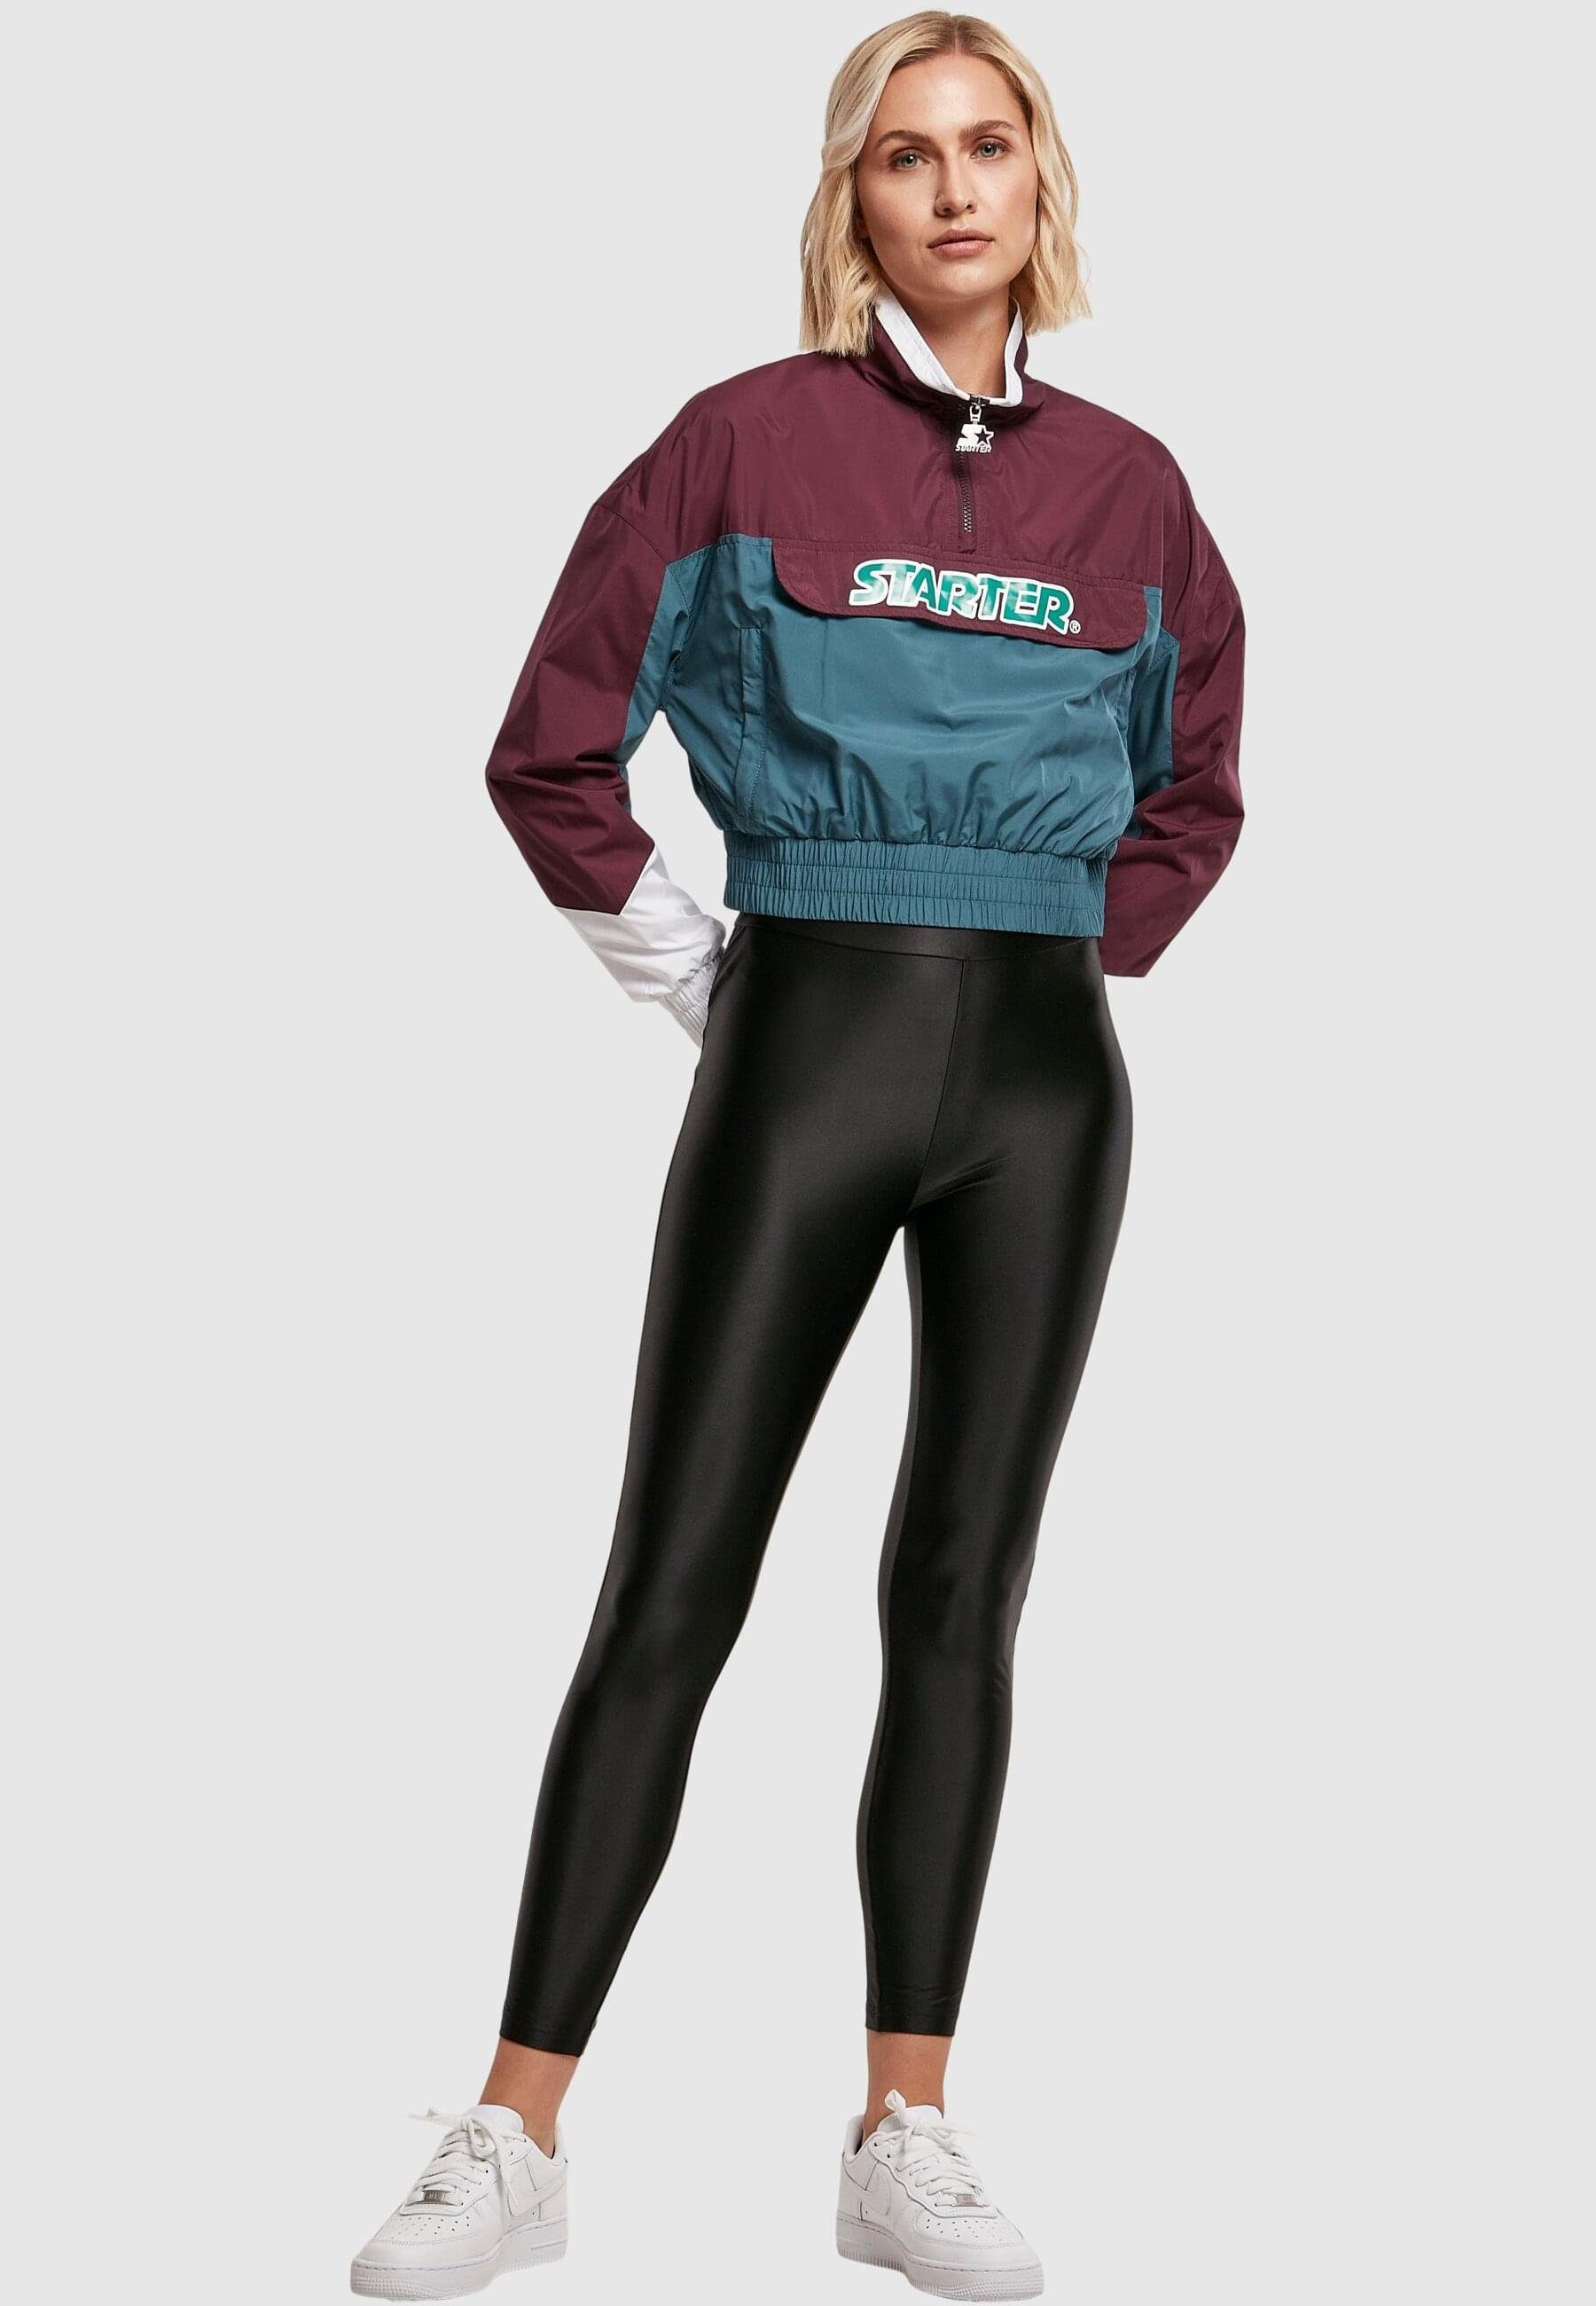 Starter Black Outdoorjacke Starter Pull (1-St) Damen Jacket Over Label Colorblock Ladies darkviolet/teal